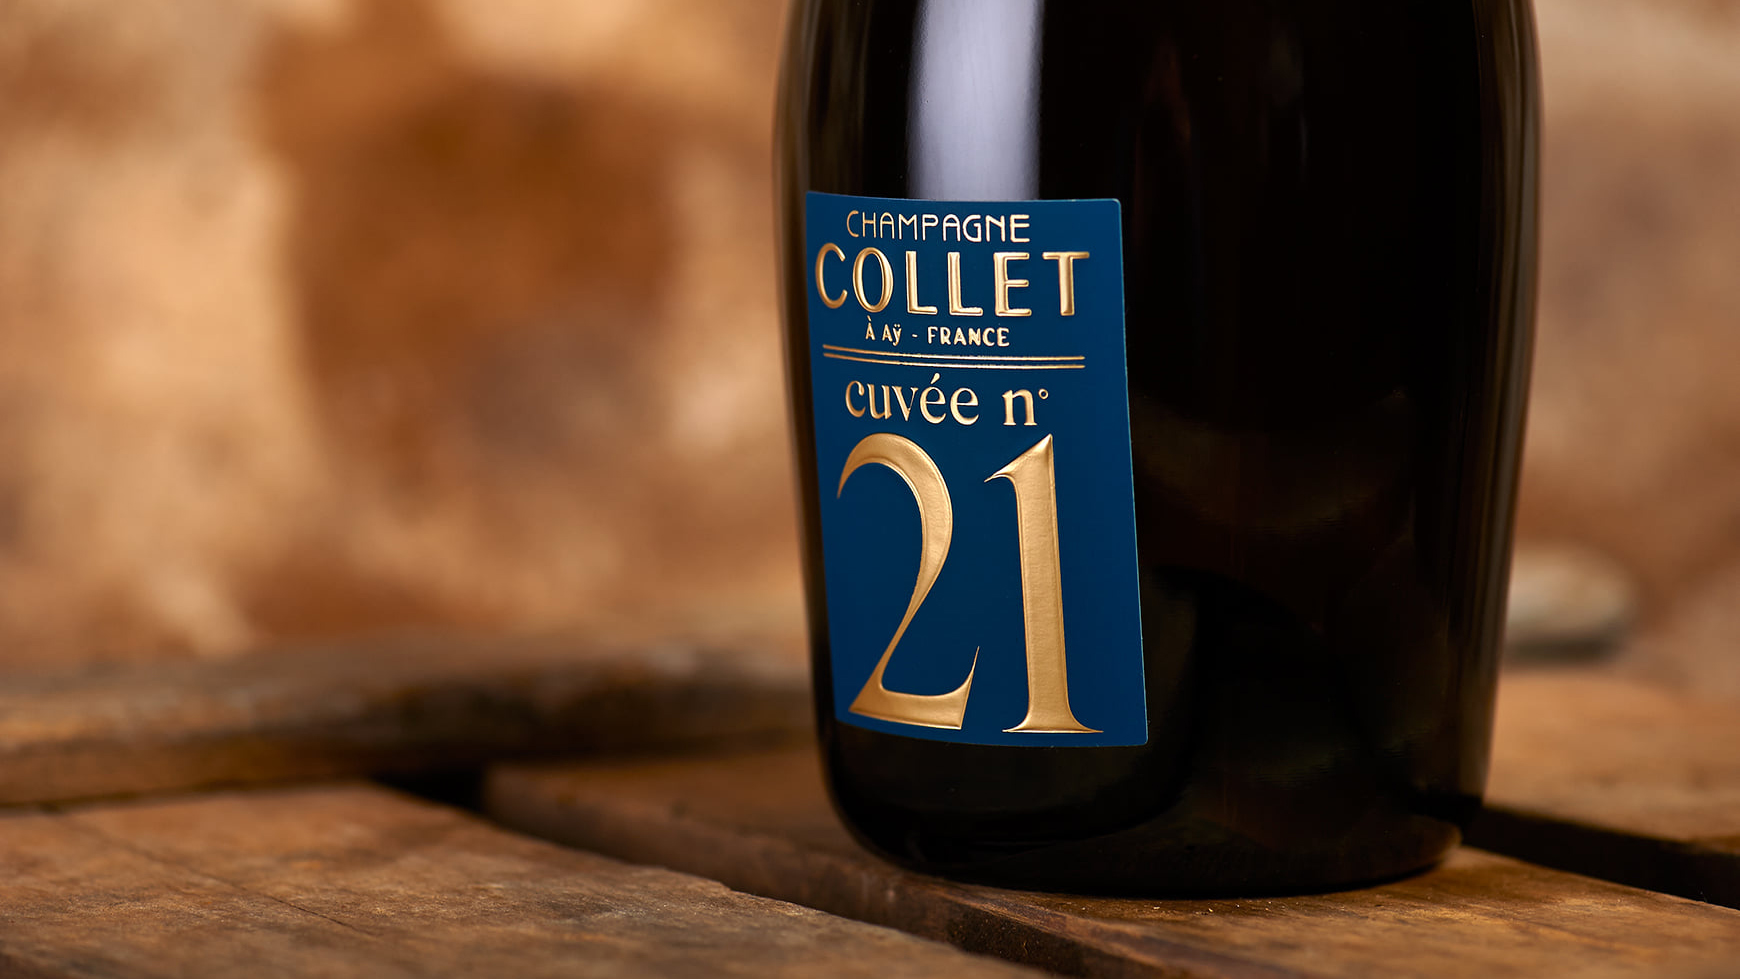 Champagne Collet Cuvée n°21